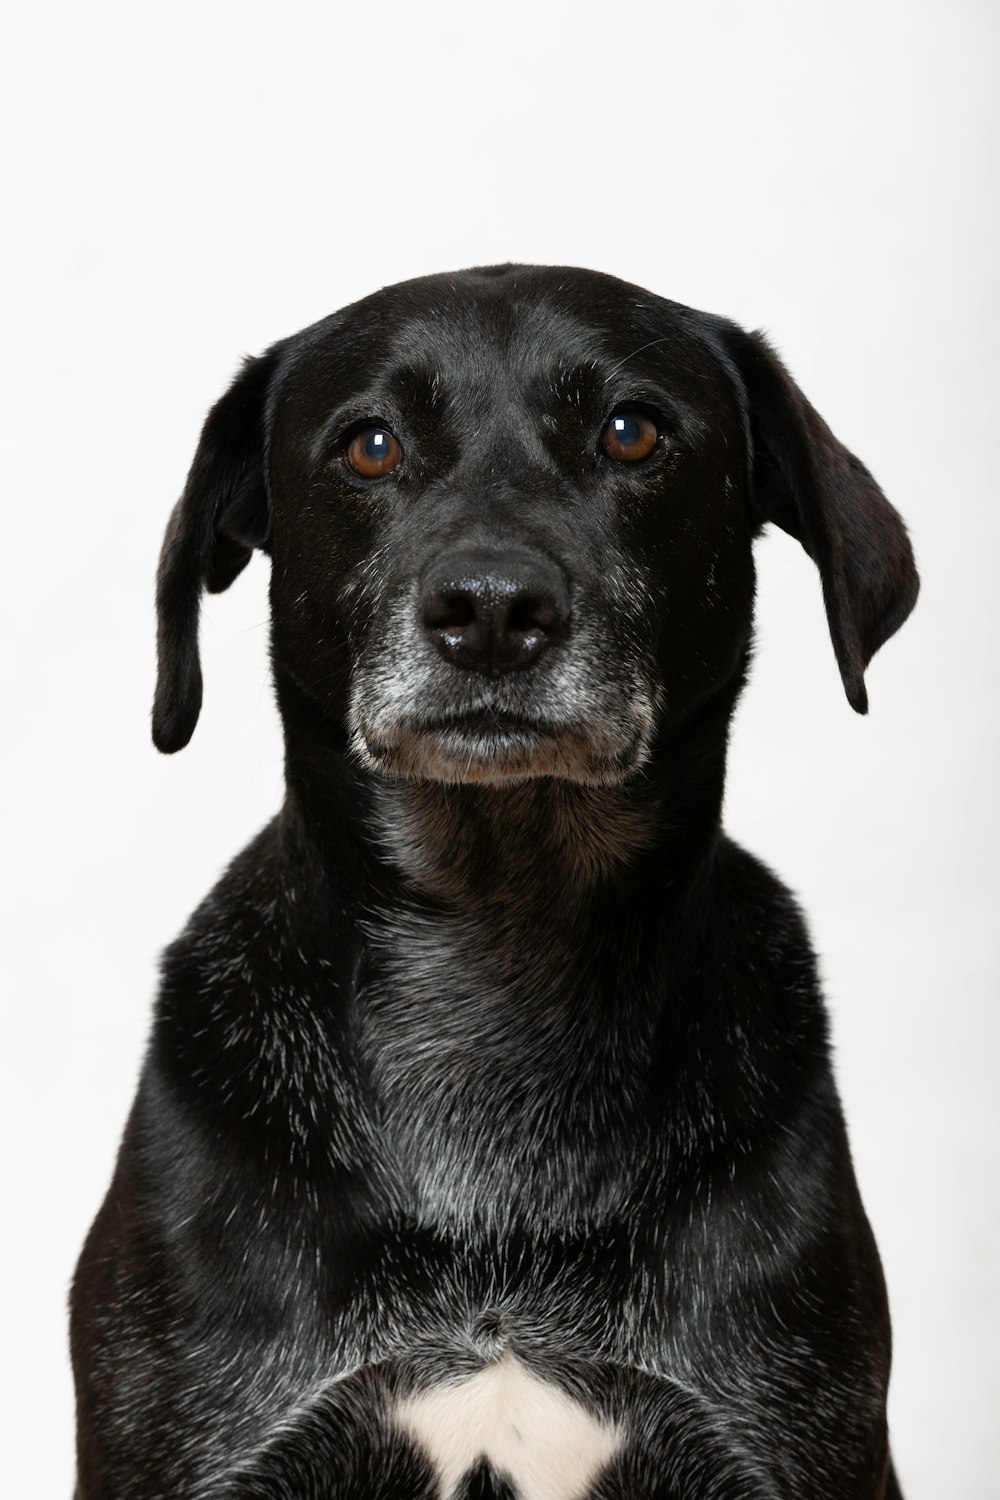 a black dog with blue eyes